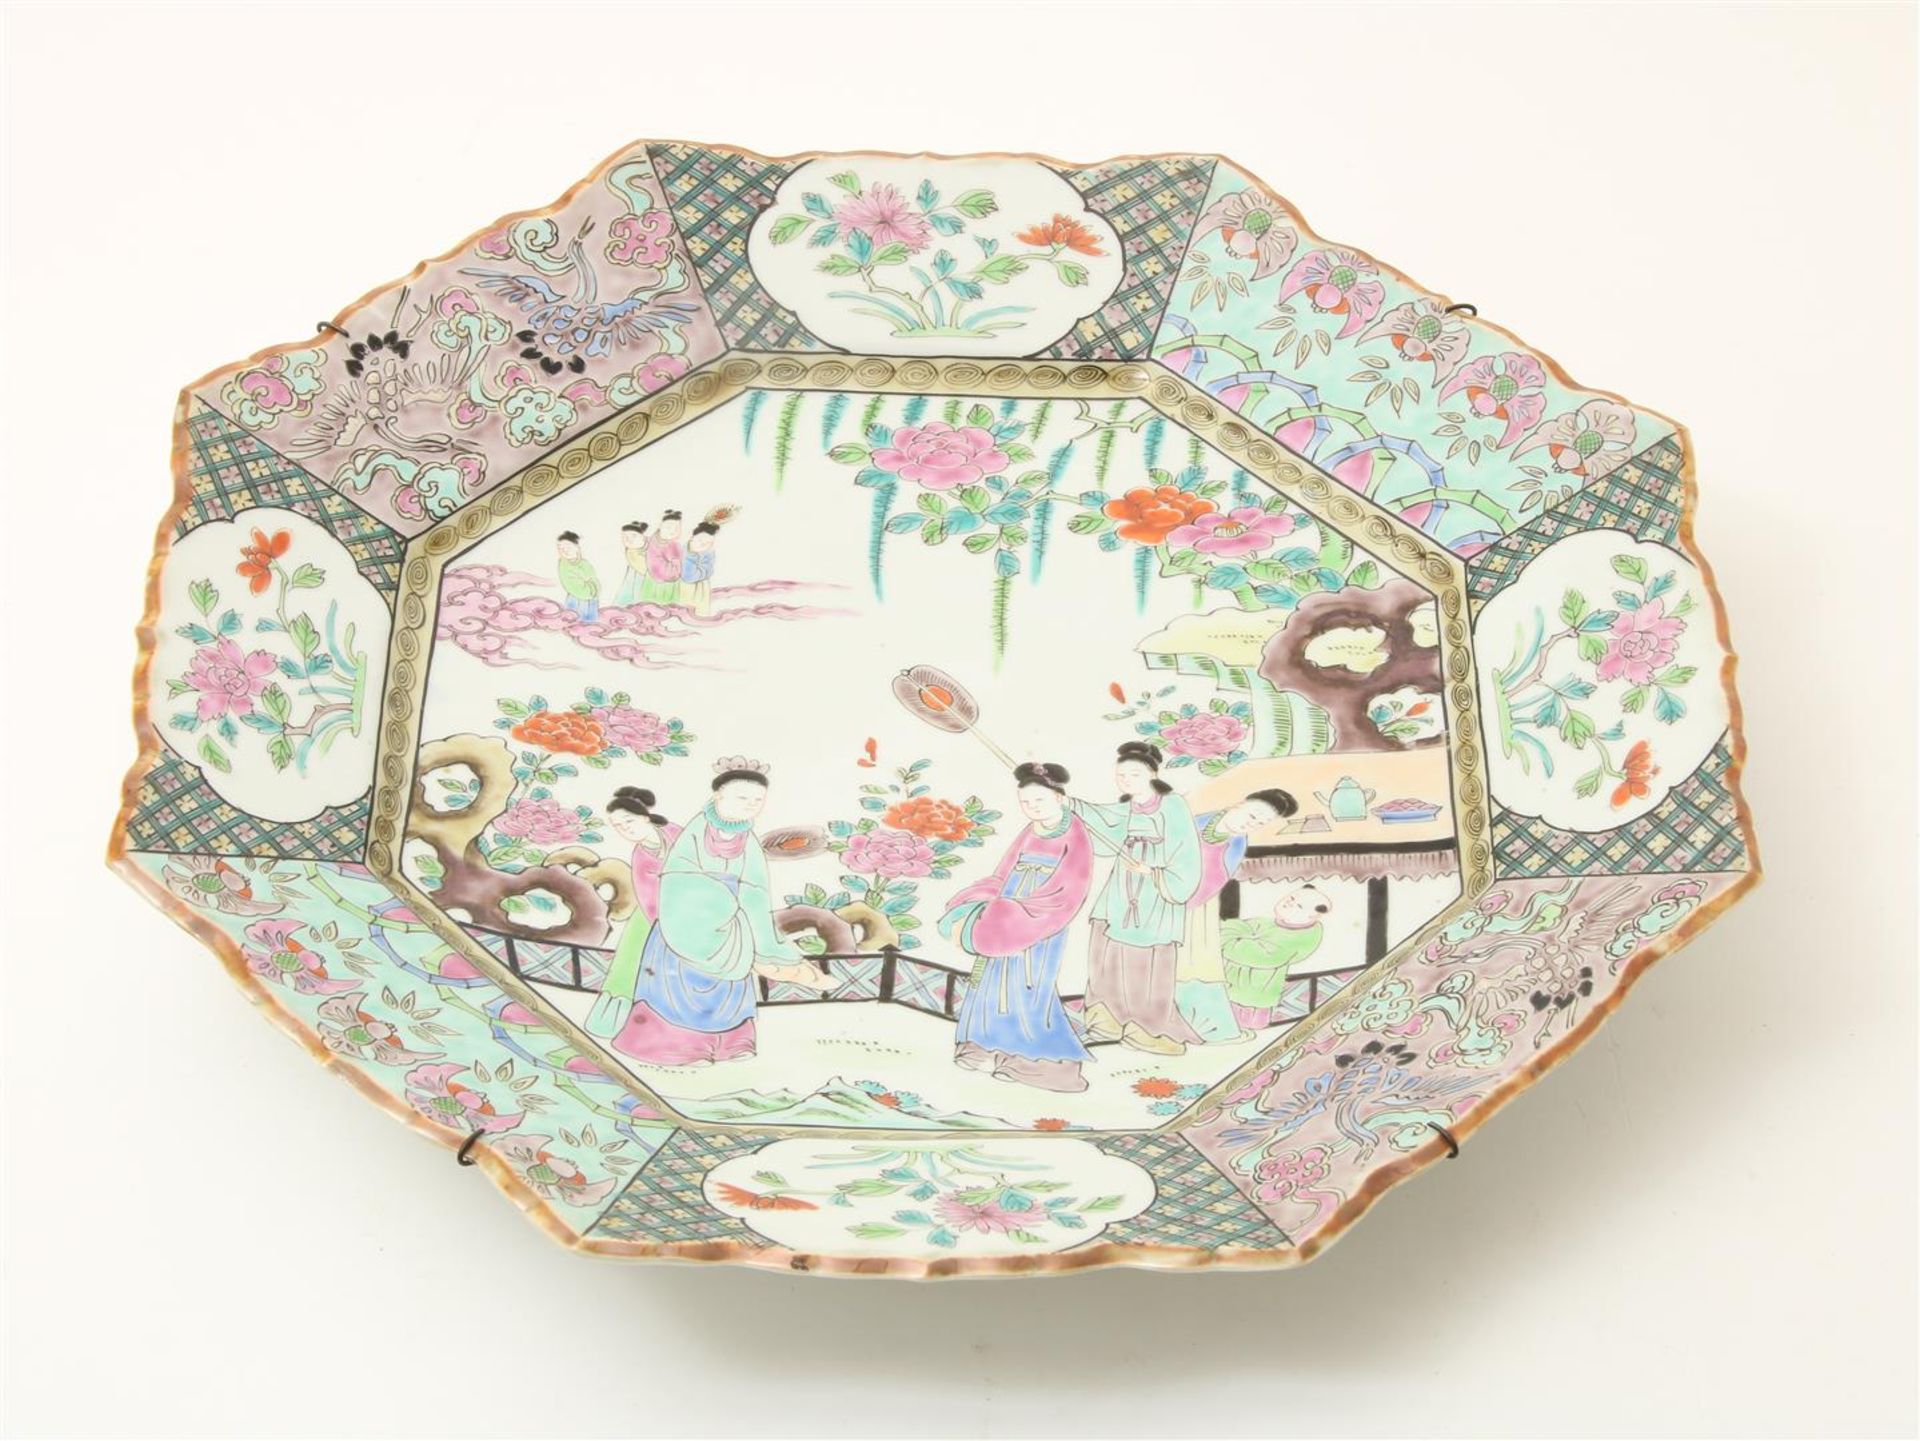 Octagonal porcelain dish, Japan, 19th century